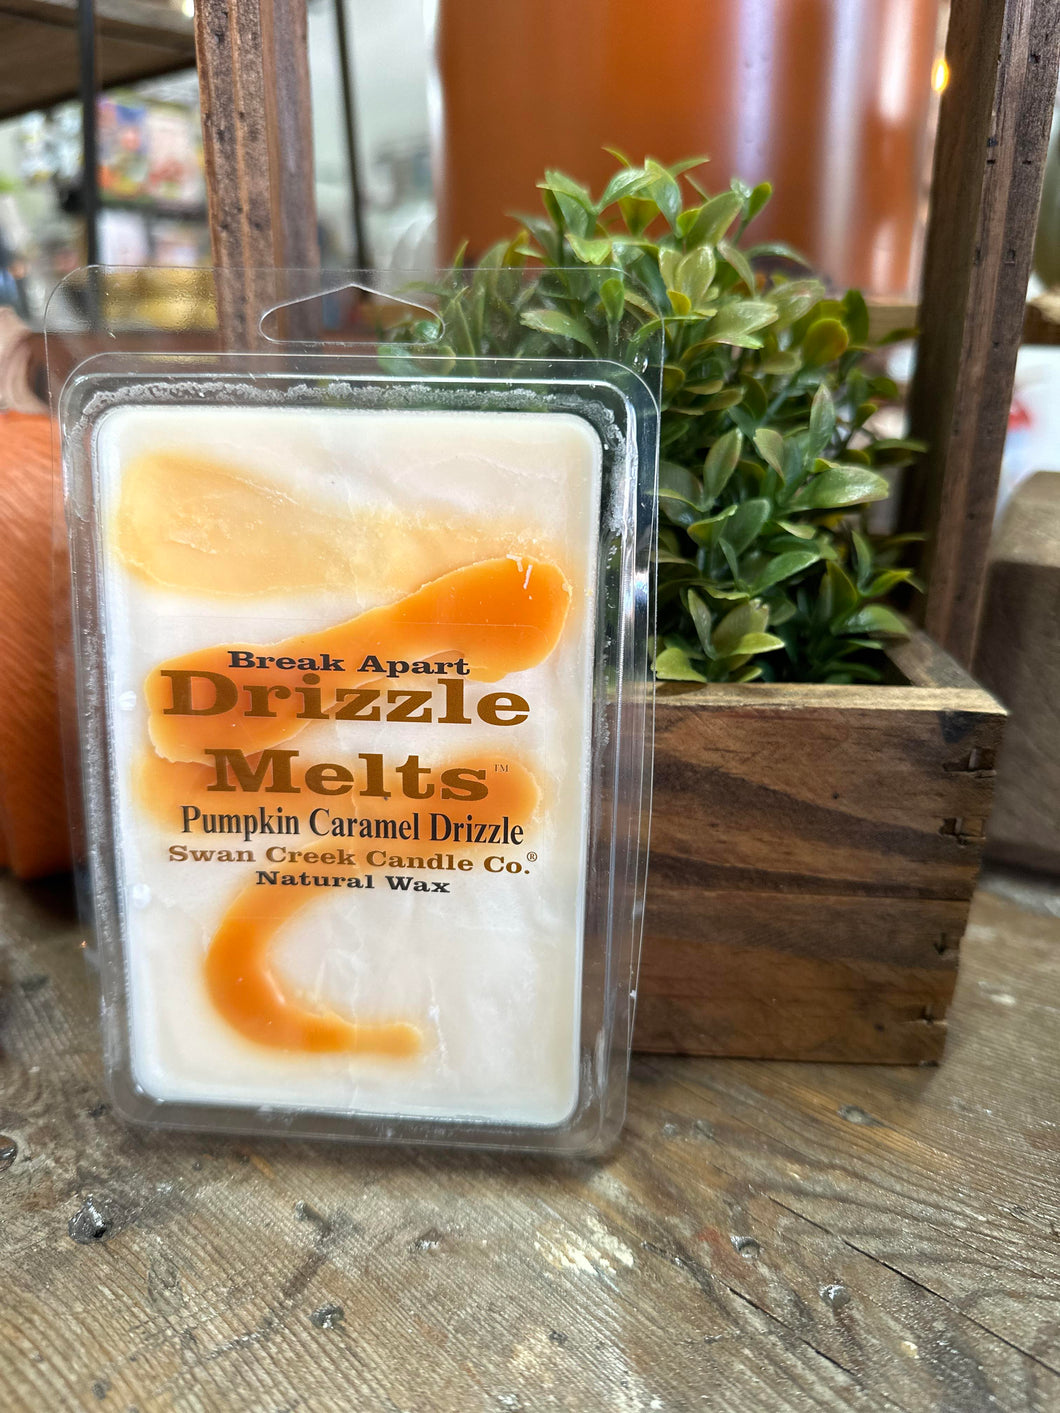 Pumpkin Caramel Drizzle Melts